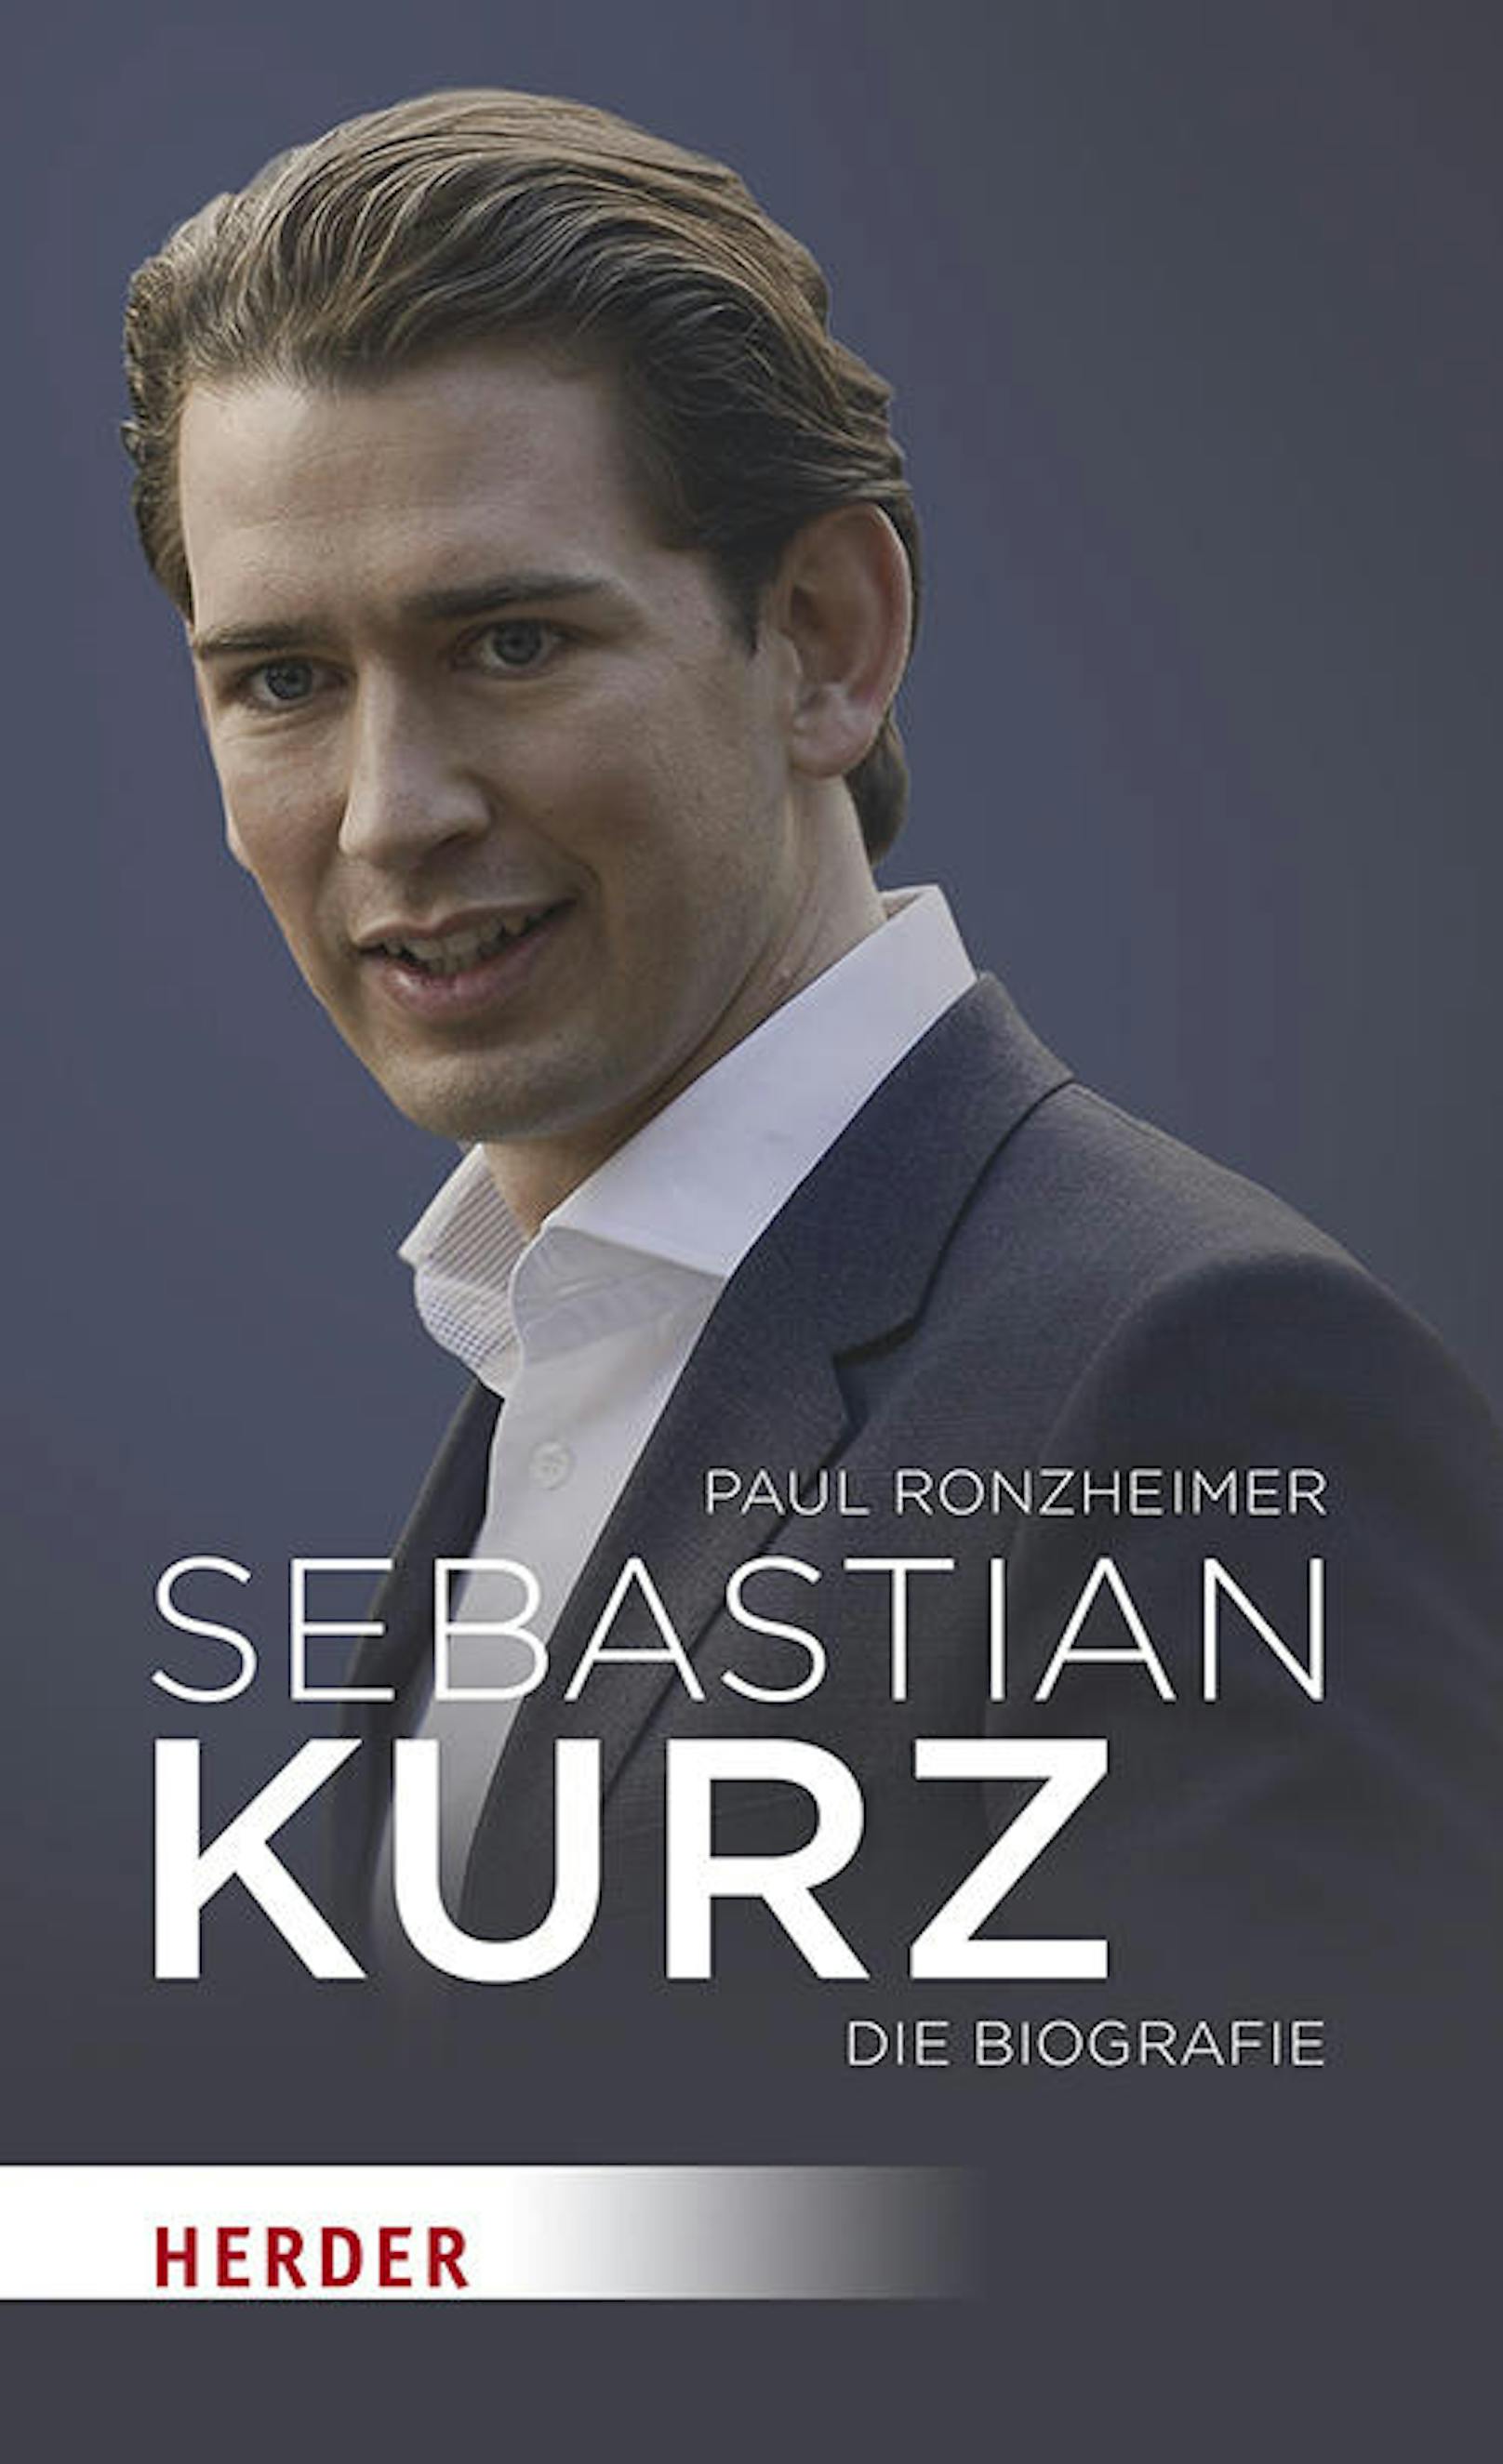 Das Cover der neuen Kurz-Biografie. <a href="https://www.herder.de/leben/?utm_source=heute.at&utm_medium=affiliate&utm_content=cpc&utm_campaign=39977">Zum Buch</a>